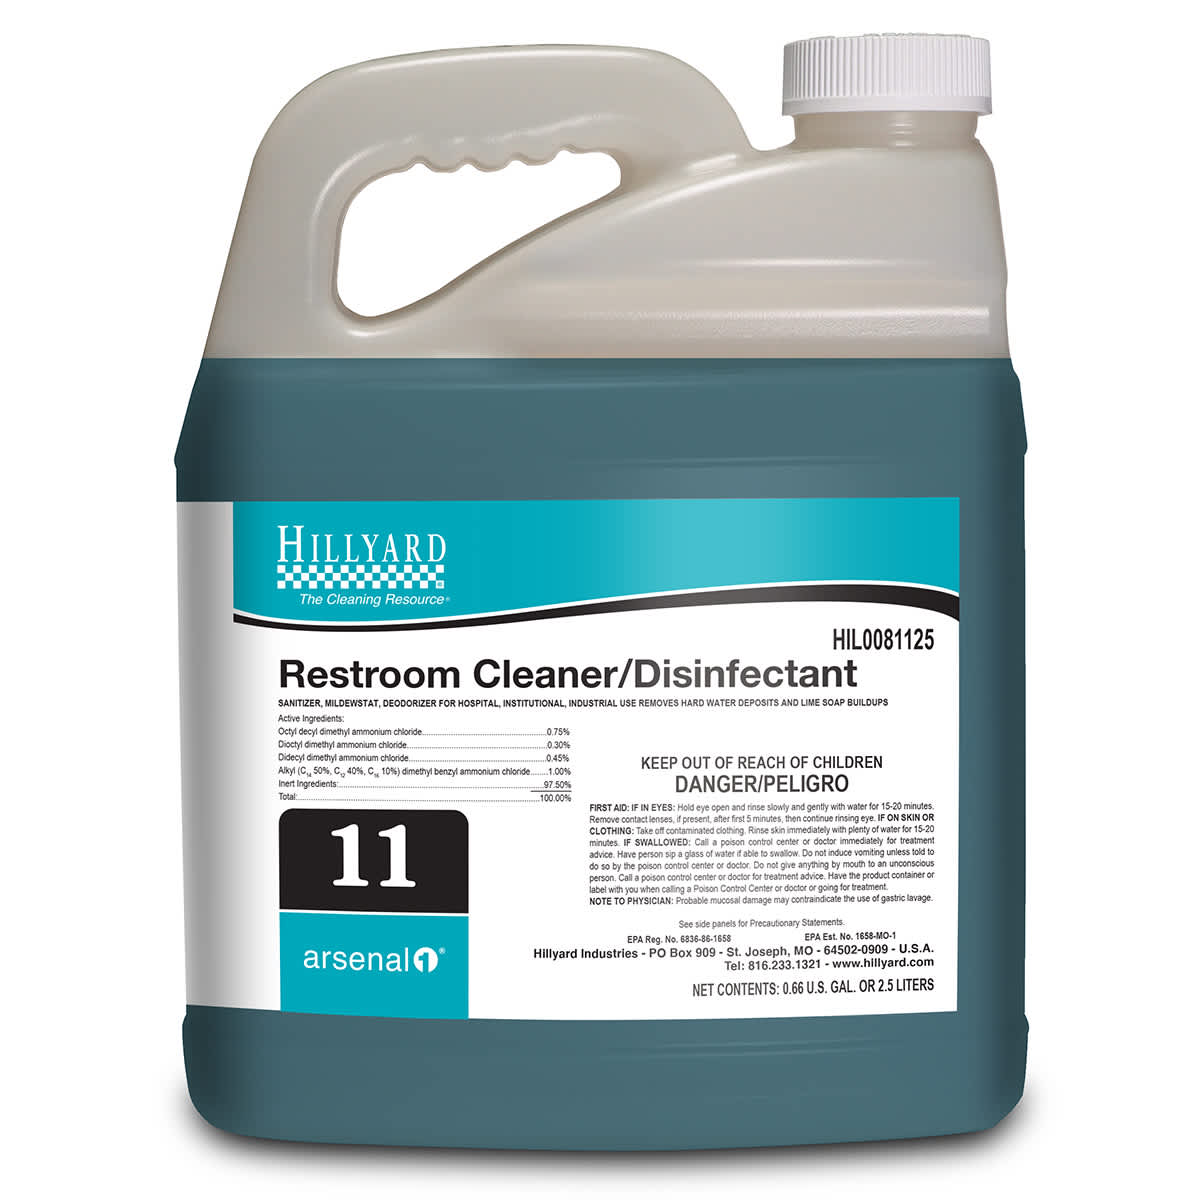 ARSENAL 1 RESTROOM
Disinfectant Cleaner